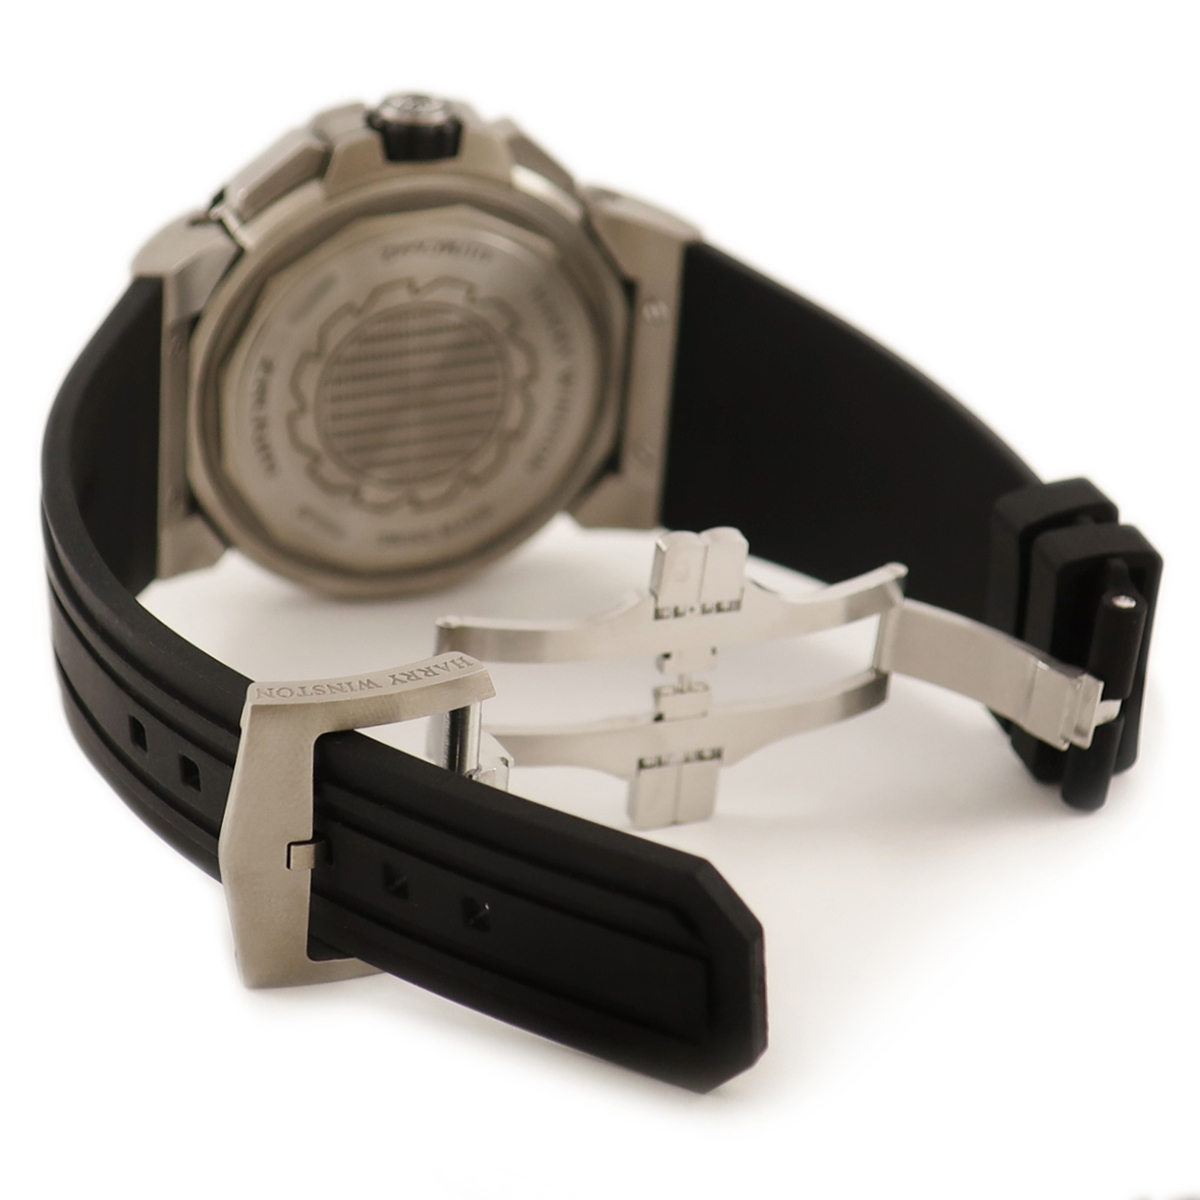 [3 year guarantee ] Harry Winston Ocean sport chronograph OCSACH44ZZ003 alloy skeleton self-winding watch men's wristwatch 